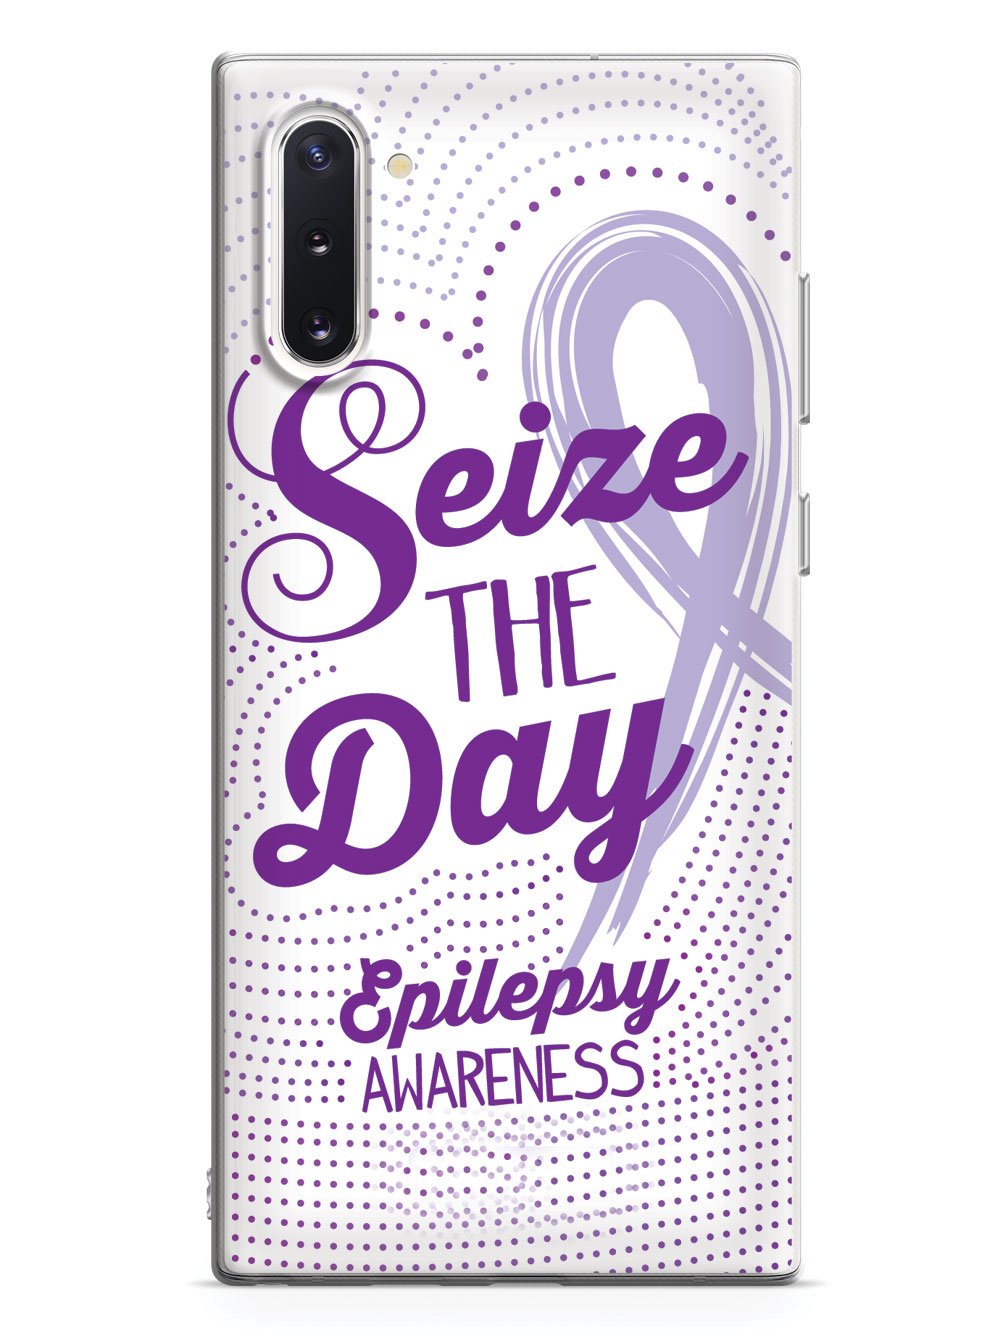 Seize the Day, Epilepsy Awareness Case